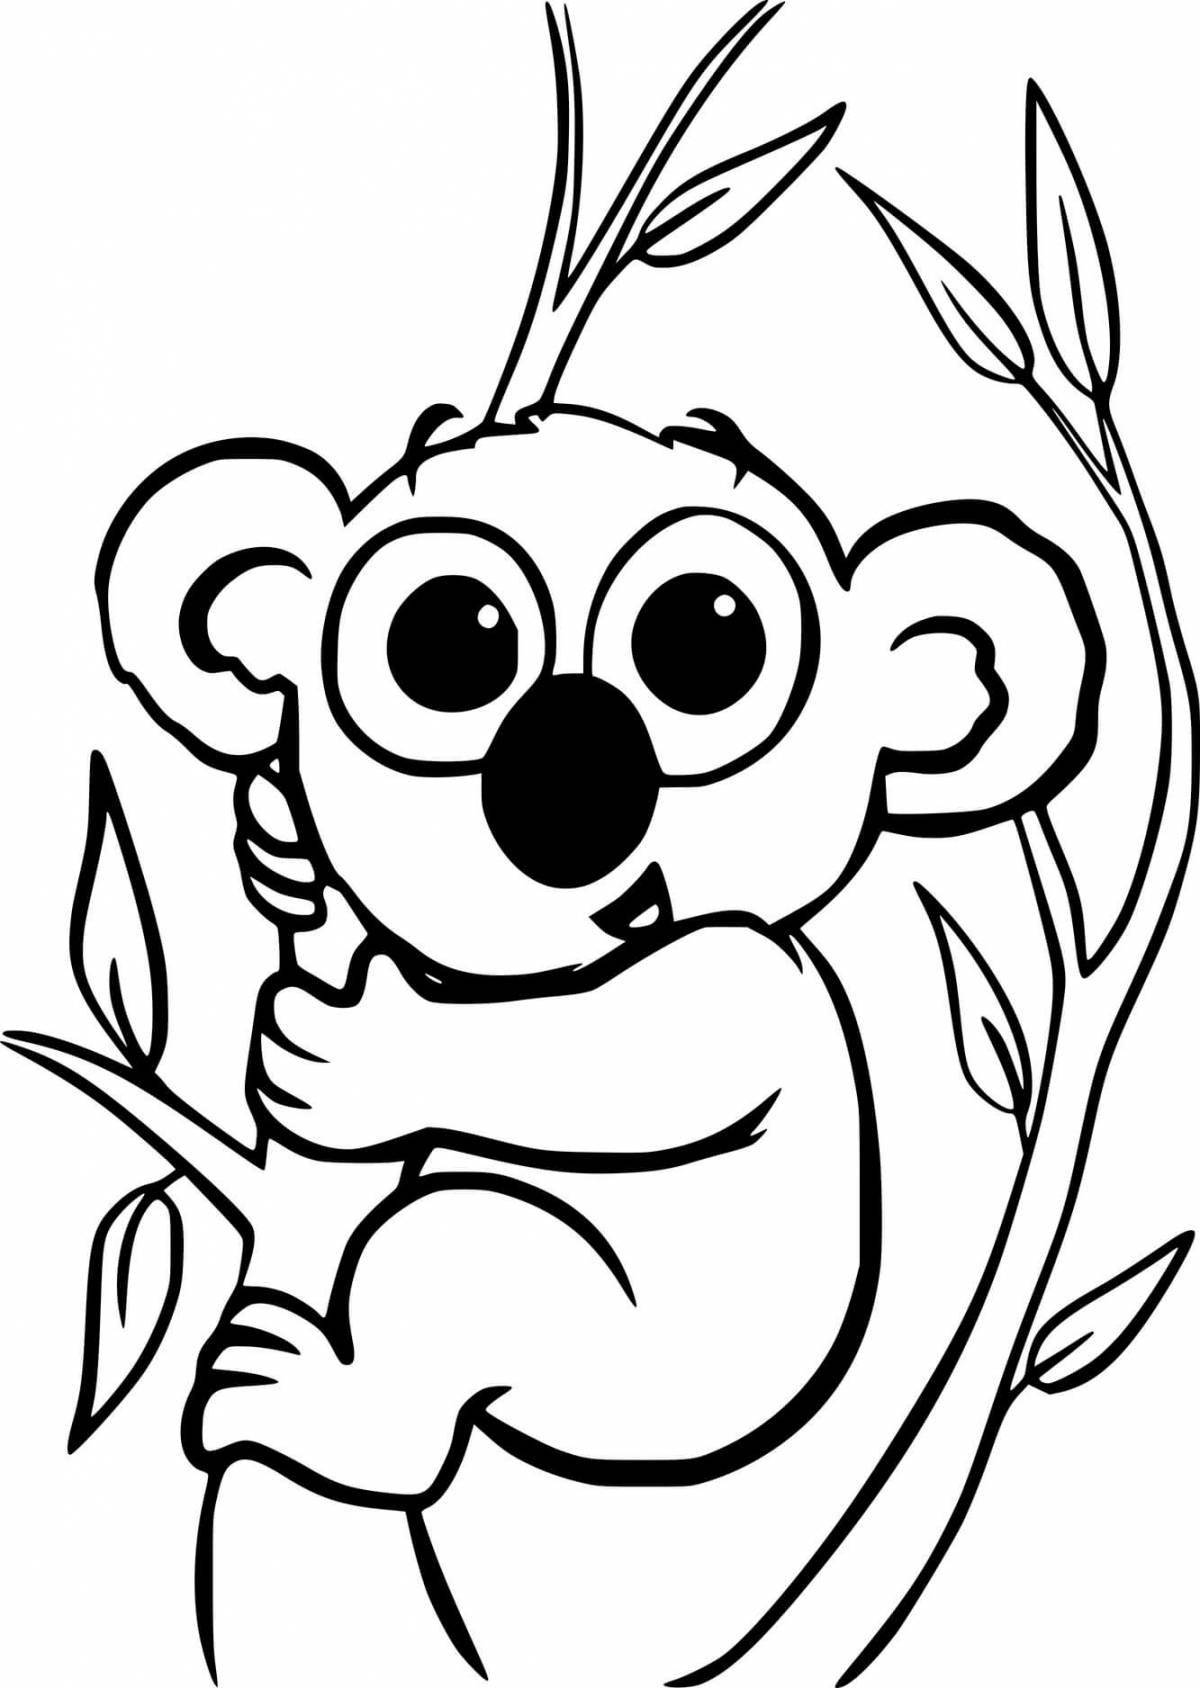 Забавная раскраска коала для детей